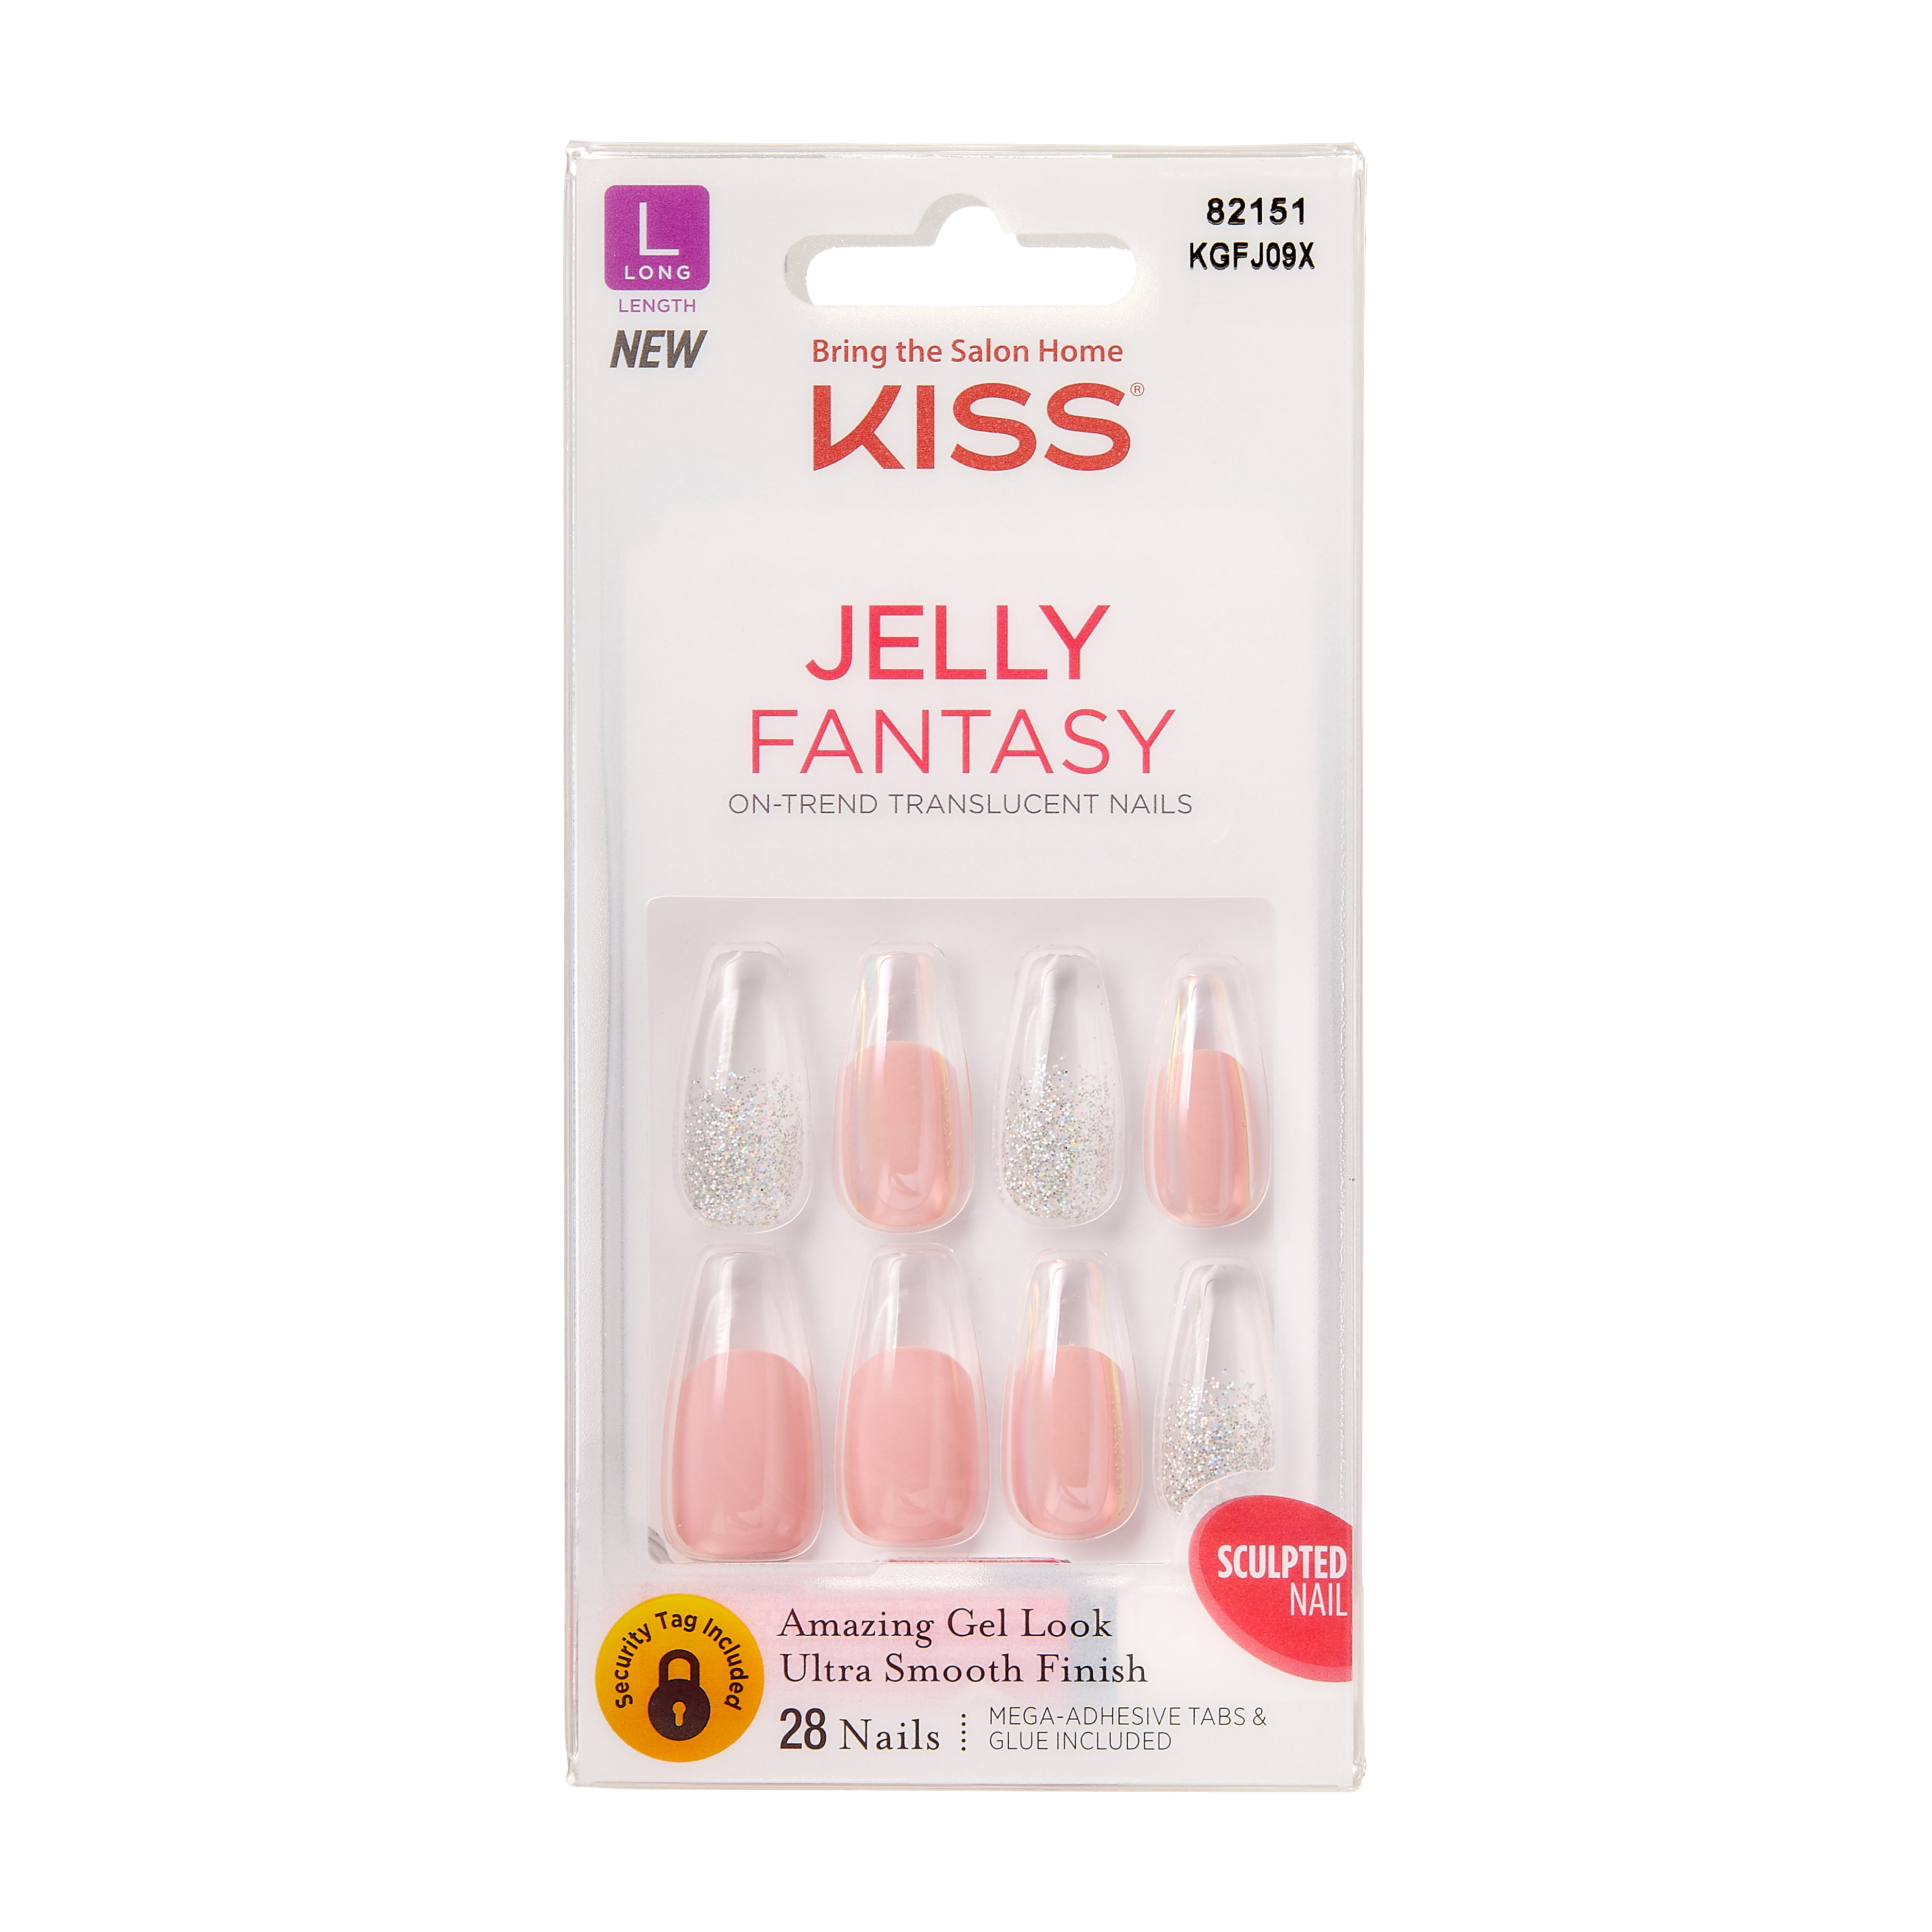 KISS - Jelly Fantasy On-Trend Translucent Nails (KGFJ09X) - Walmart.com